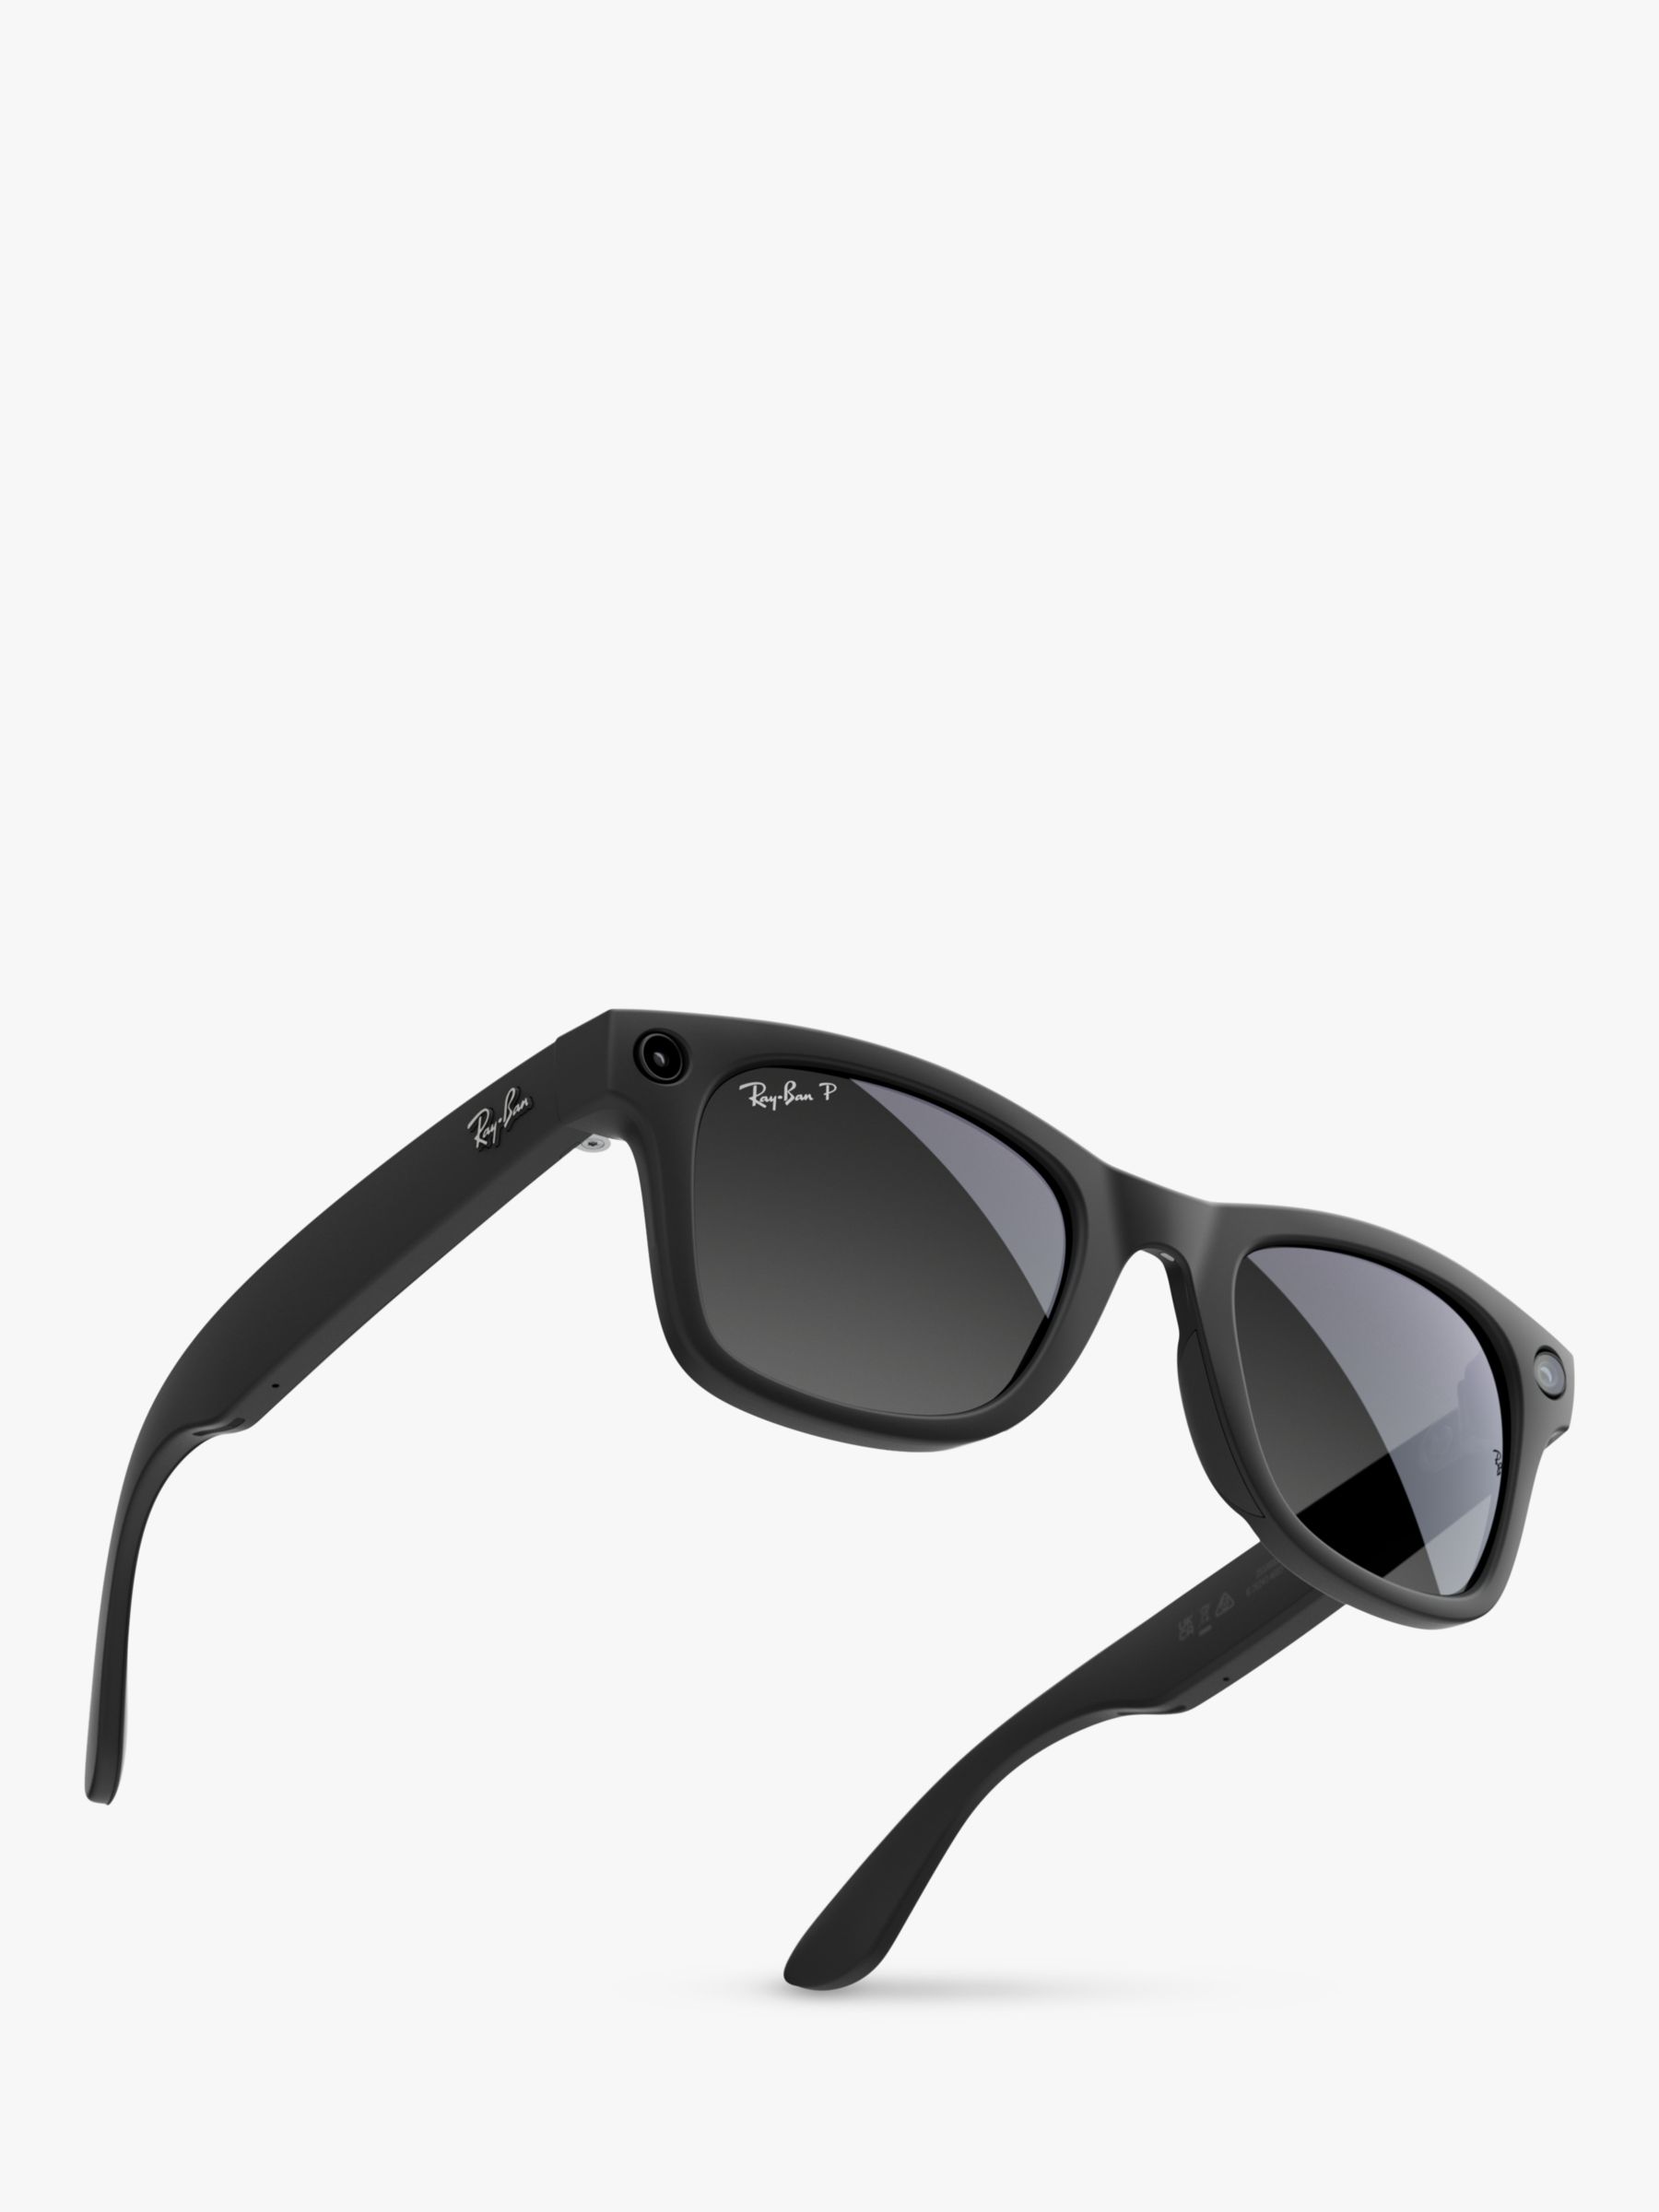 Ray-Ban Meta Wayfarer (Standard) Smart Glasses, Matte Black, Polarised Graphite Lens